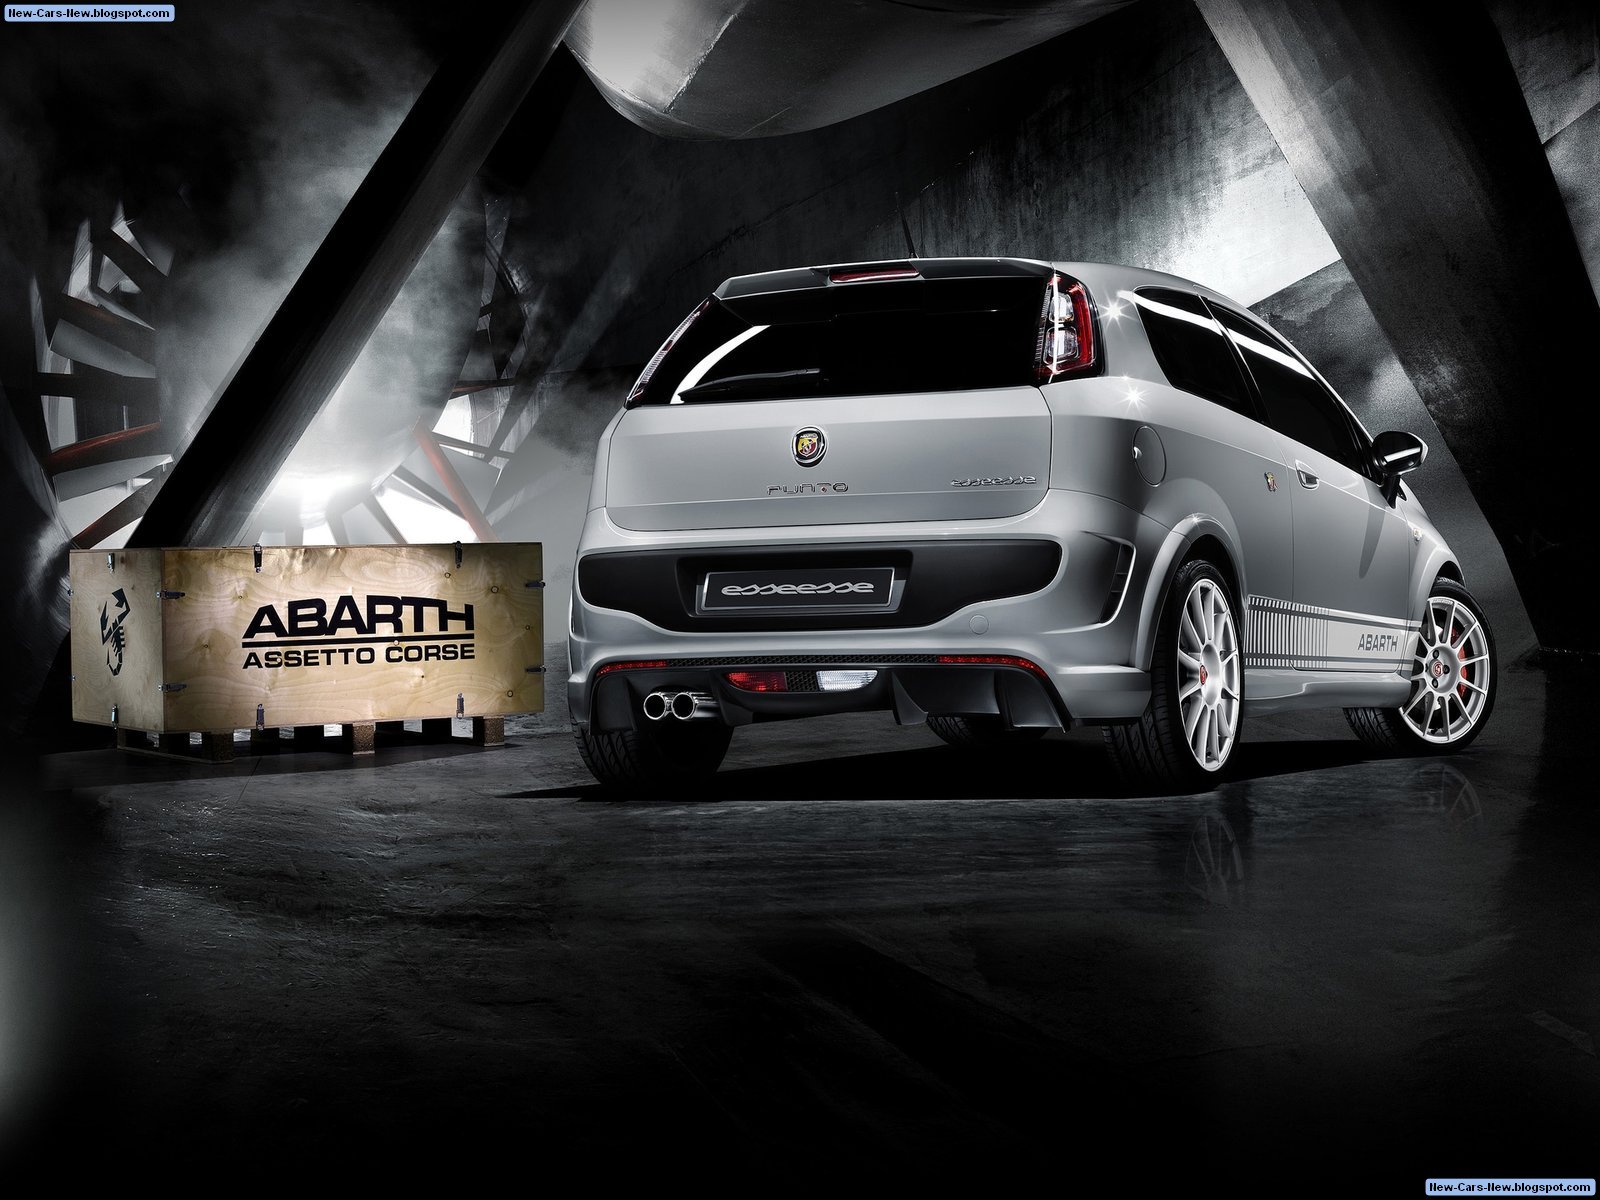 Fiat Punto Evo Abarth esseesse (2011) - Best Car Blog: Fiat Punto Evo ...